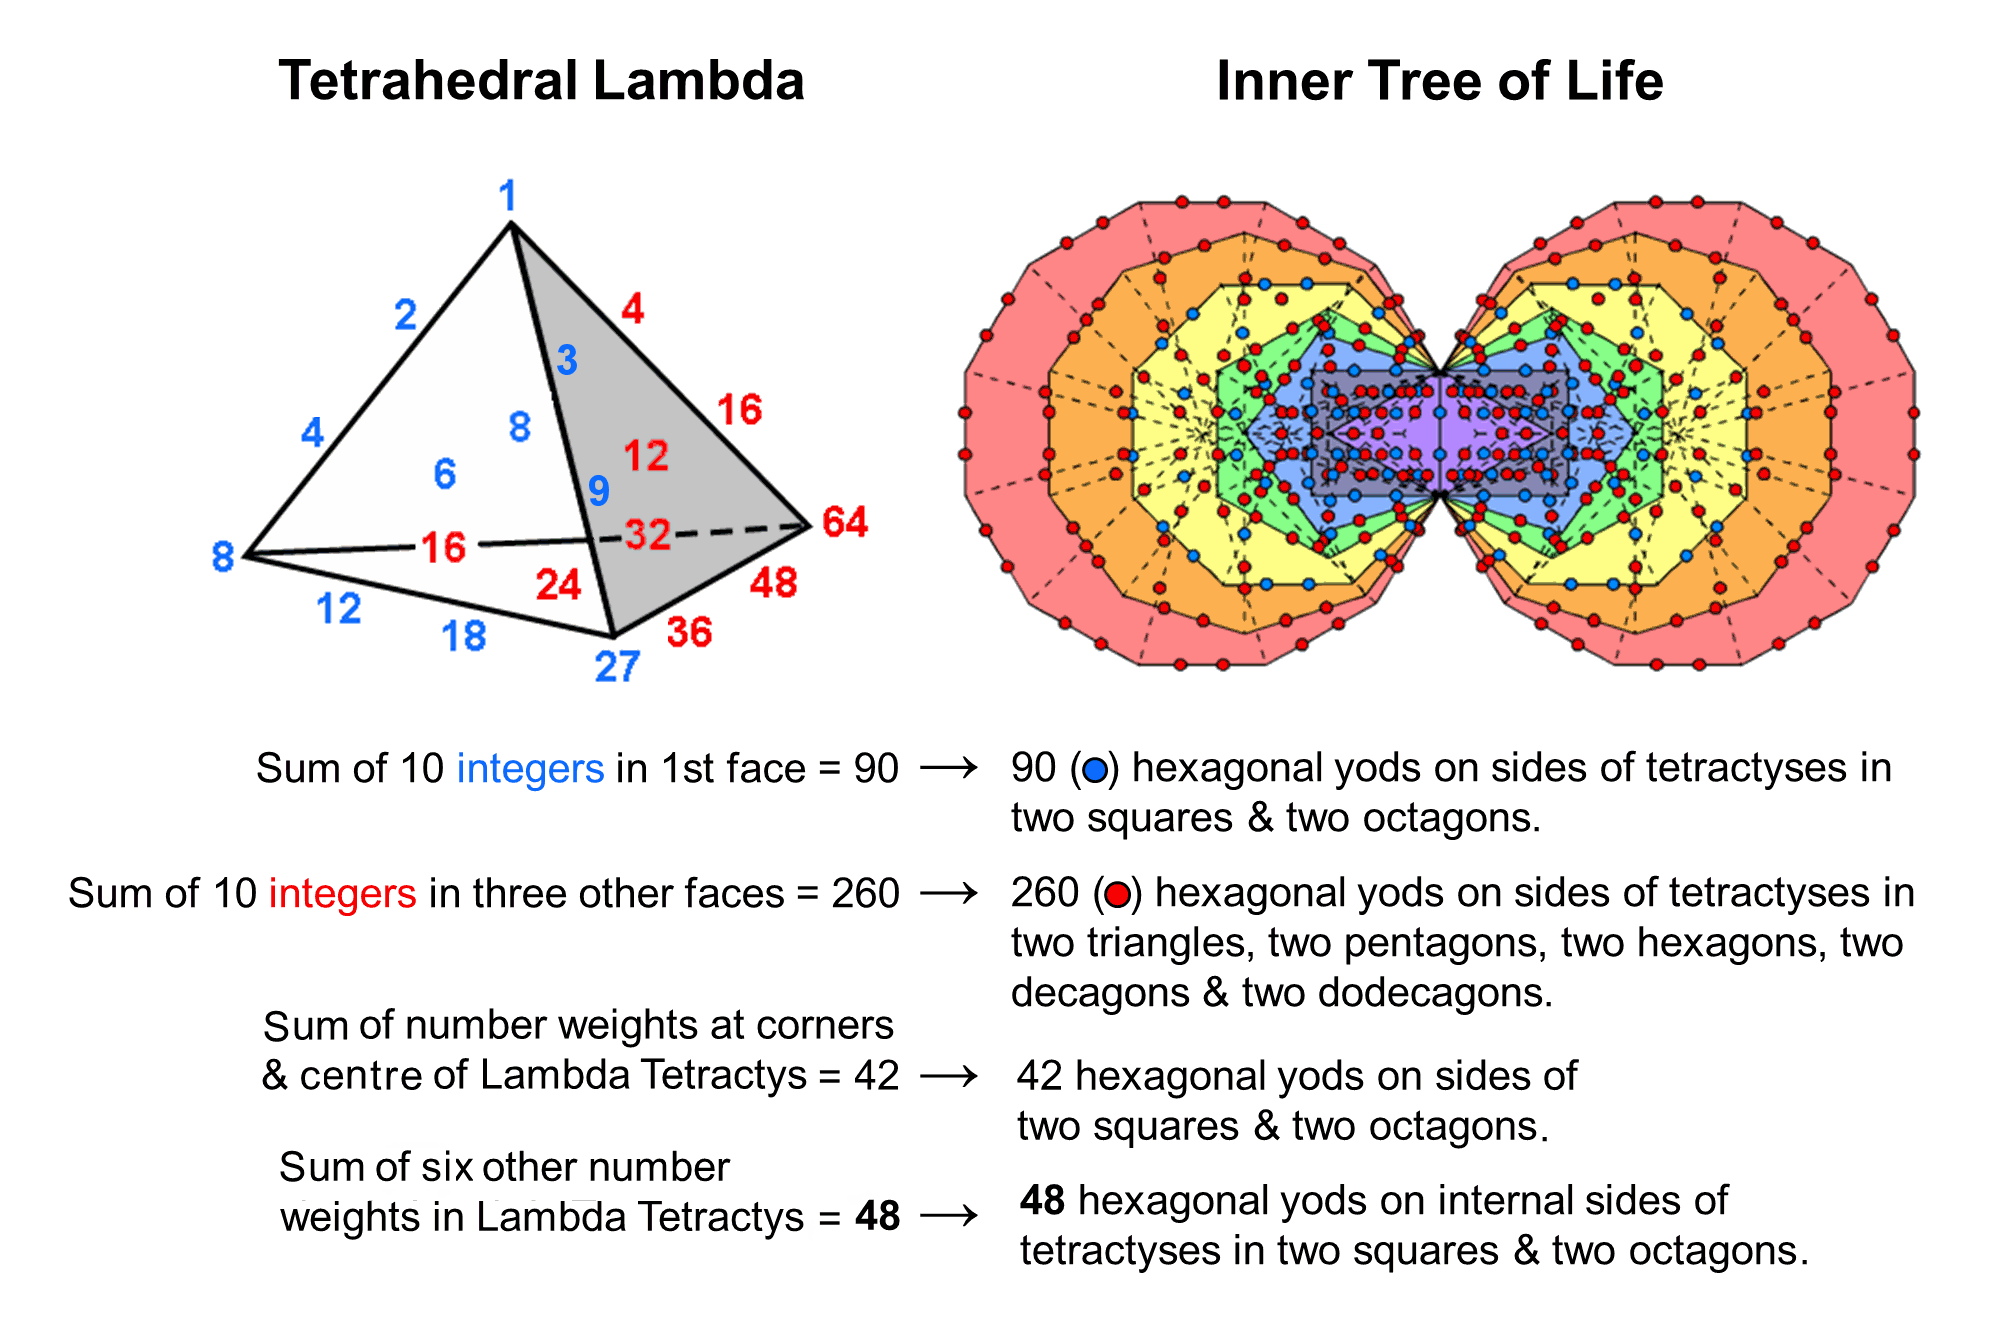 Correspondences between Tetrahedral Lambda and inner Tree of Life